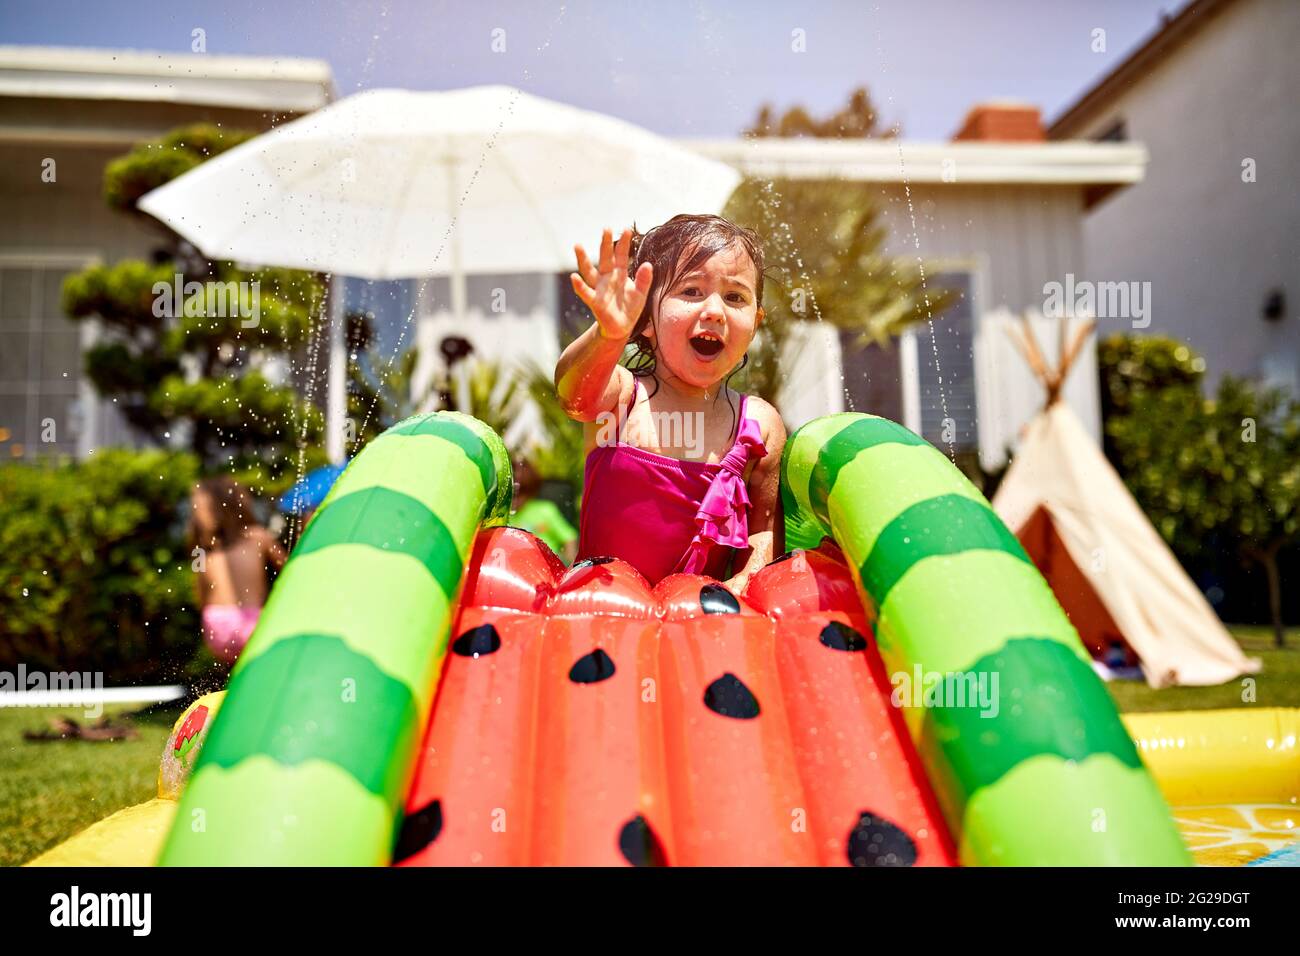 Girl playing on wet inflatable slide in backyard Stock Photo